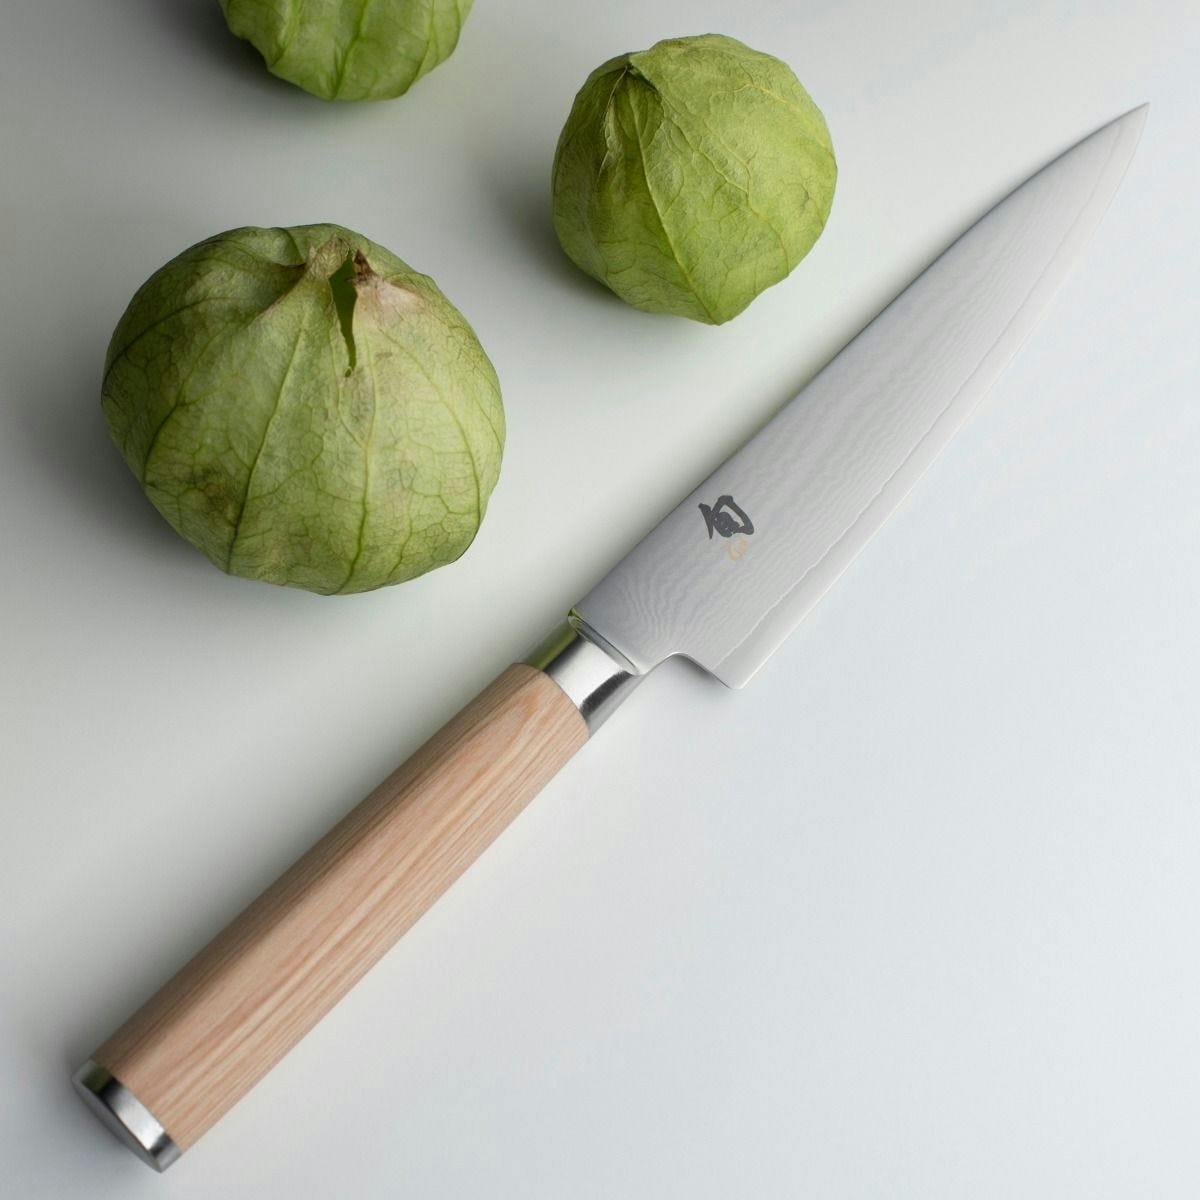 Shun Classic Blonde Chef's Knife, 6"